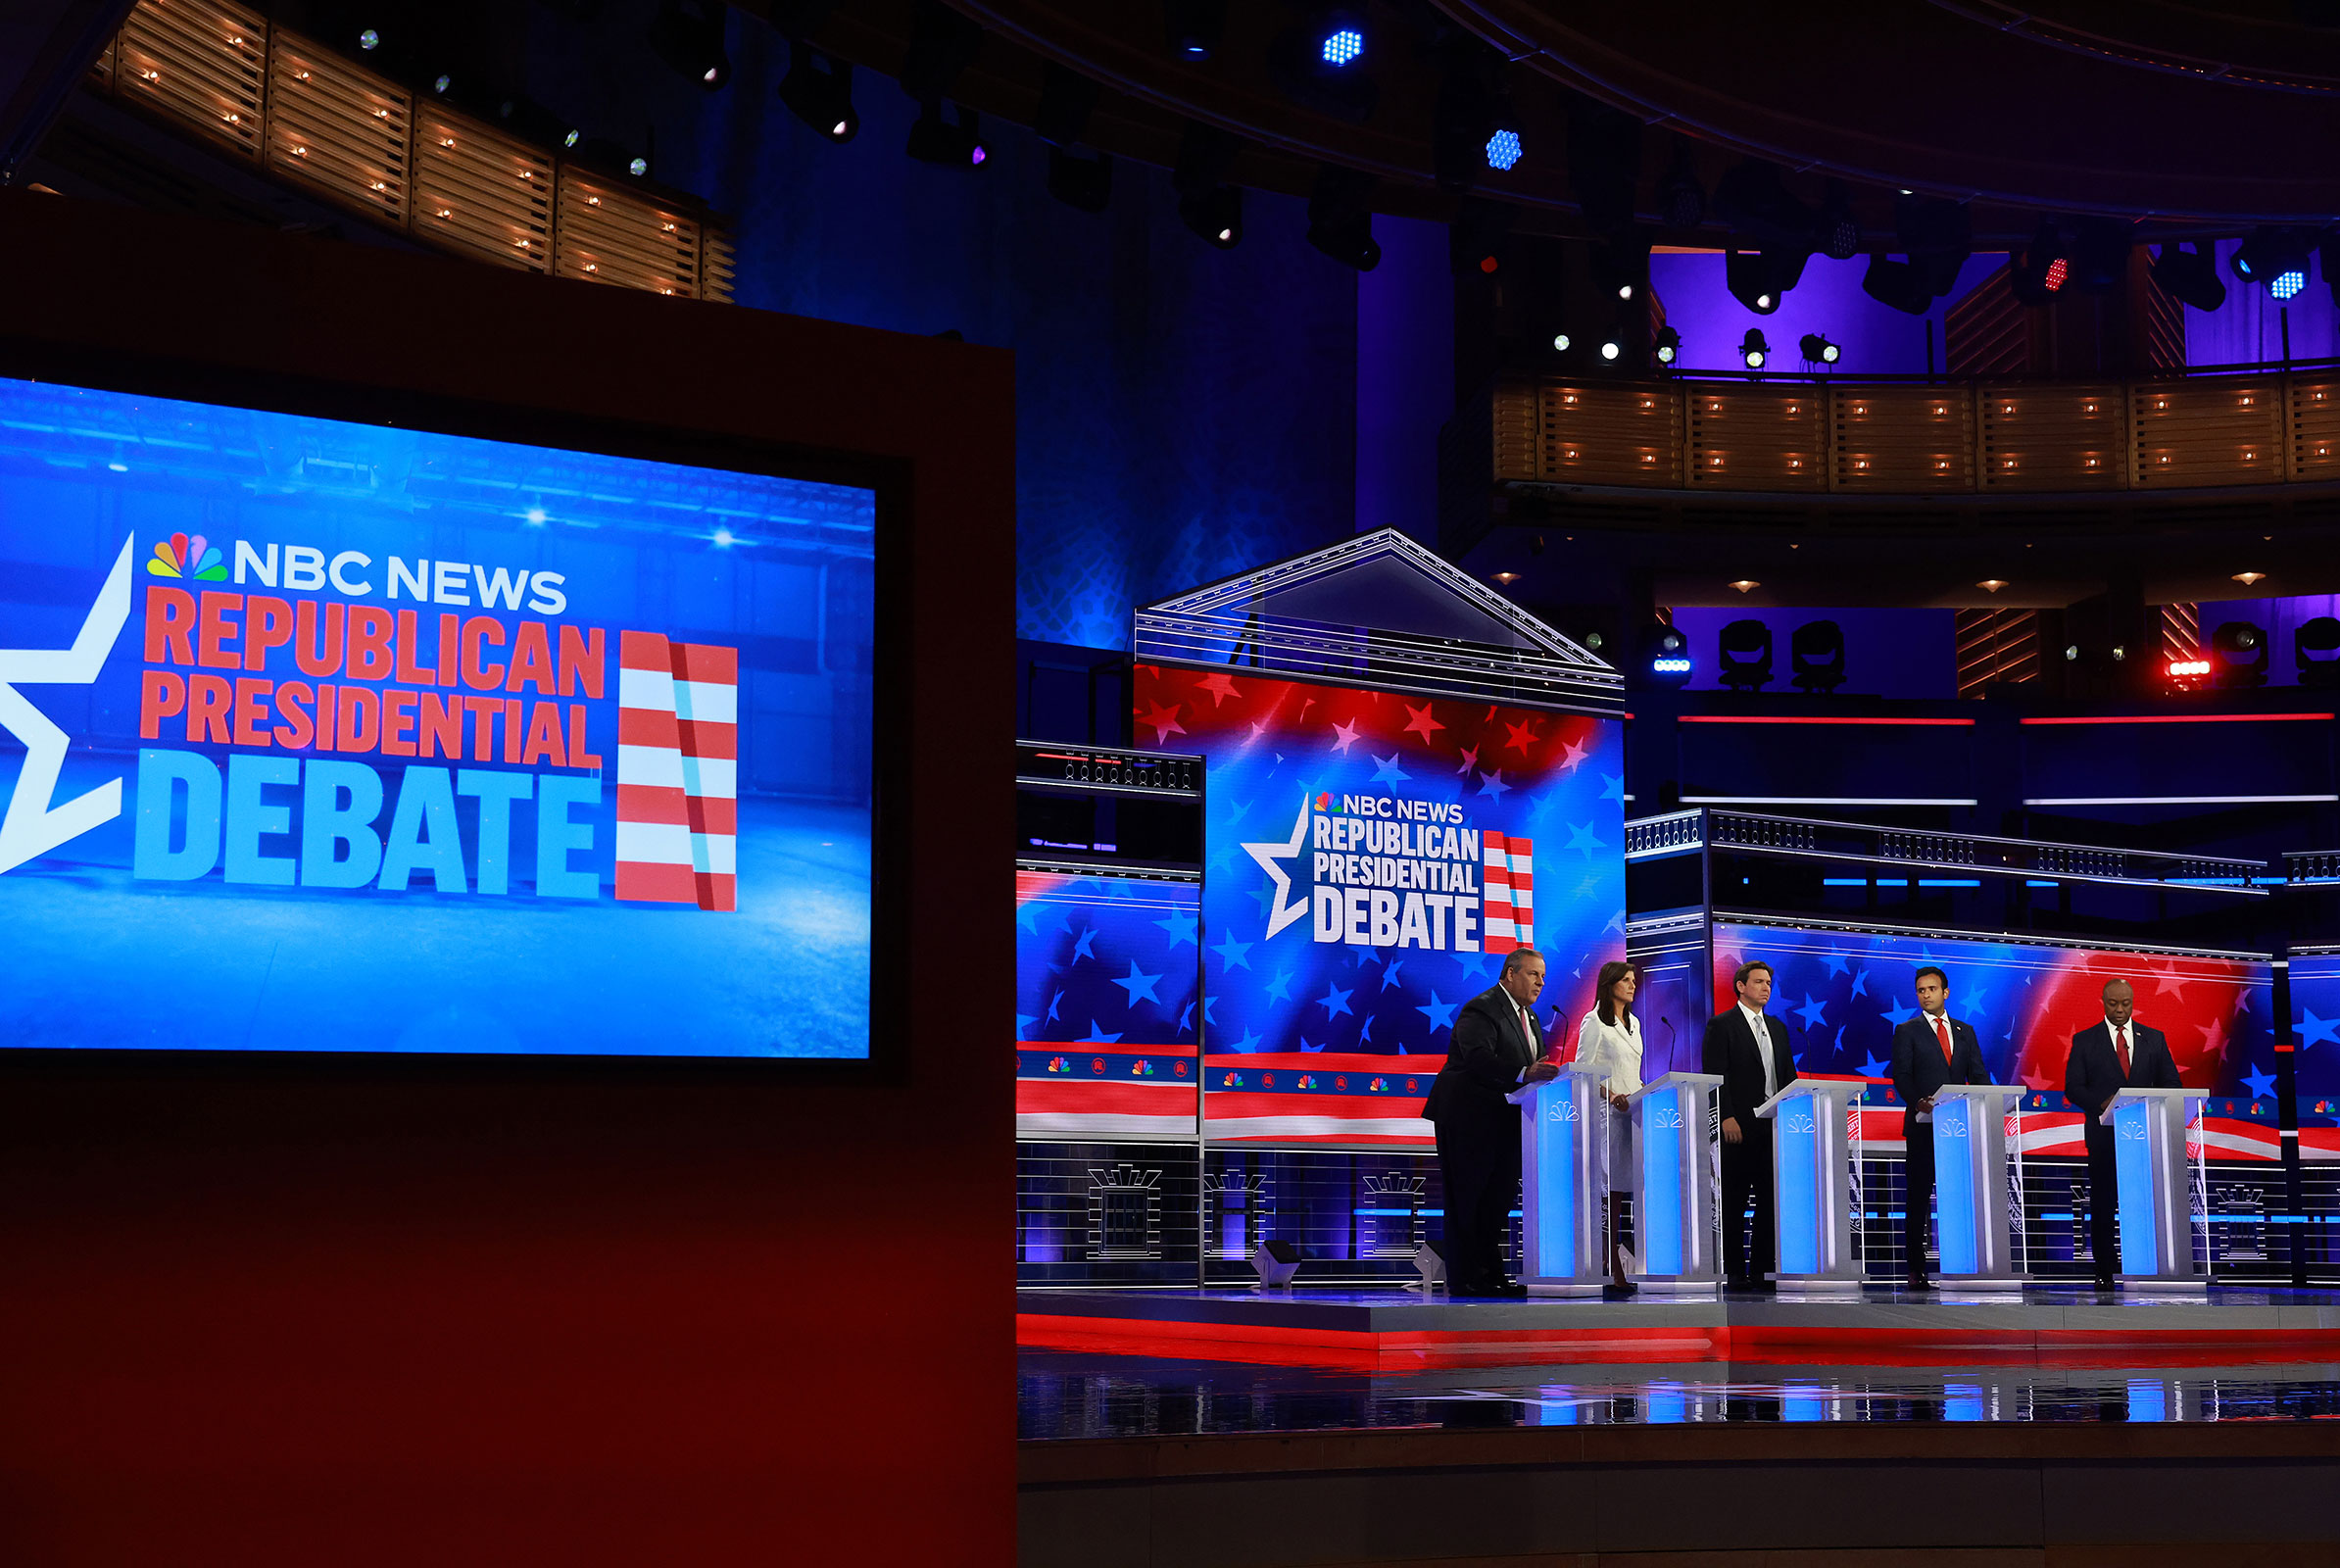 NBC News Hosts Miami Republican Presidential Debate